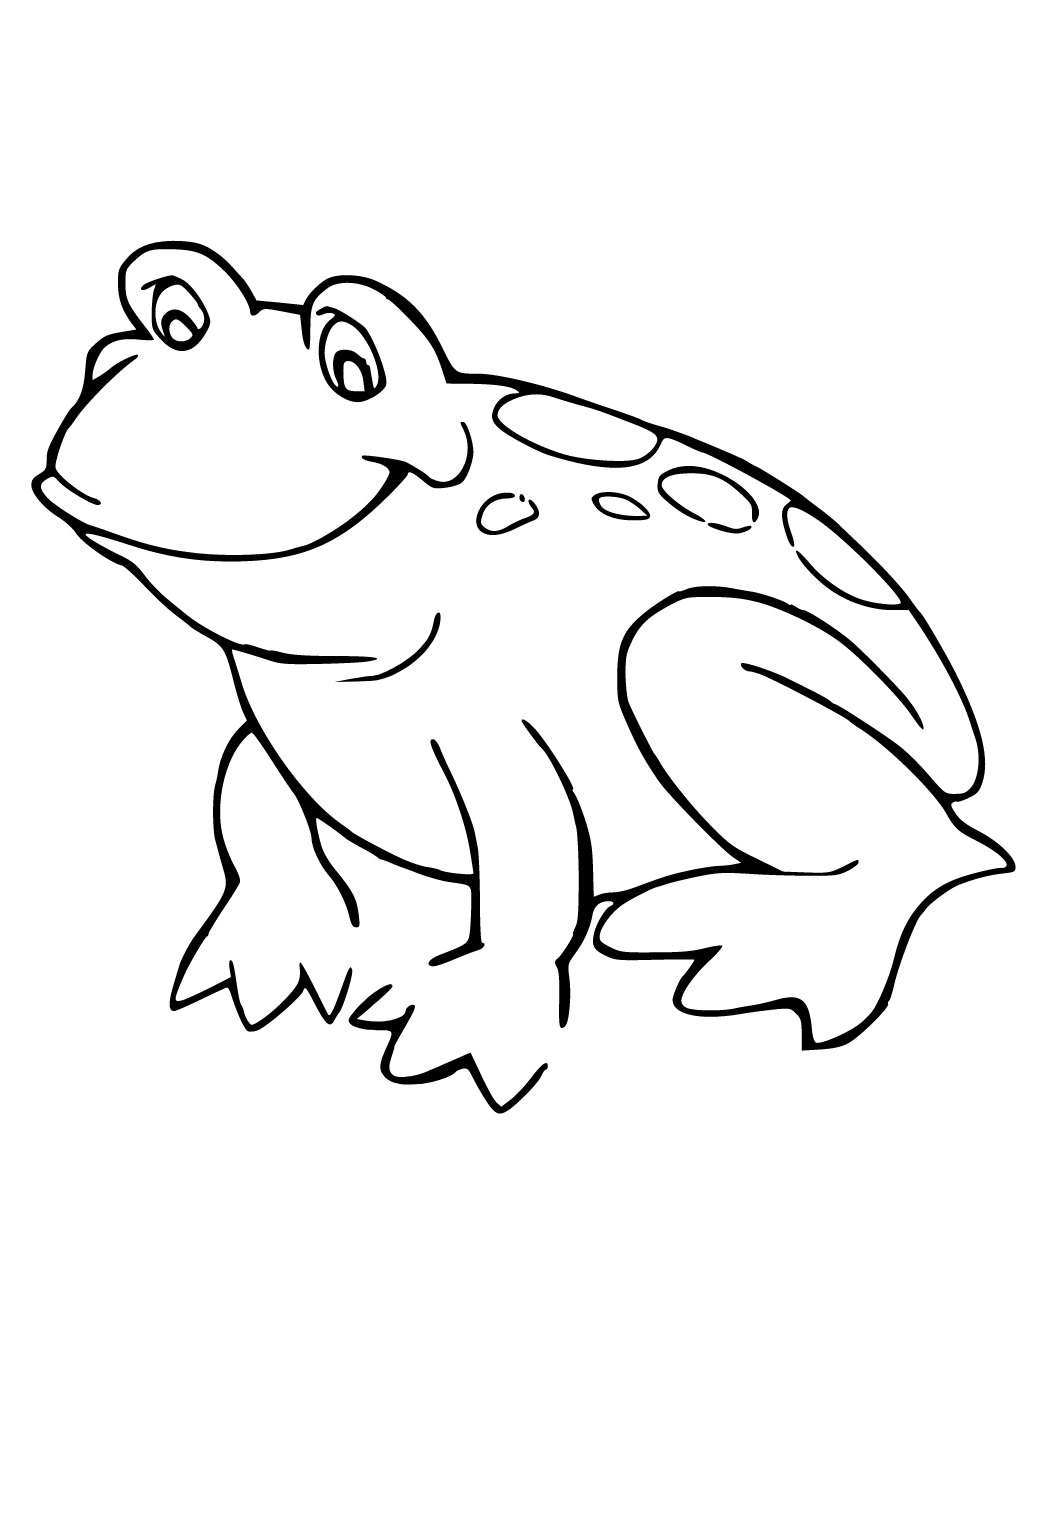 Kurbağa